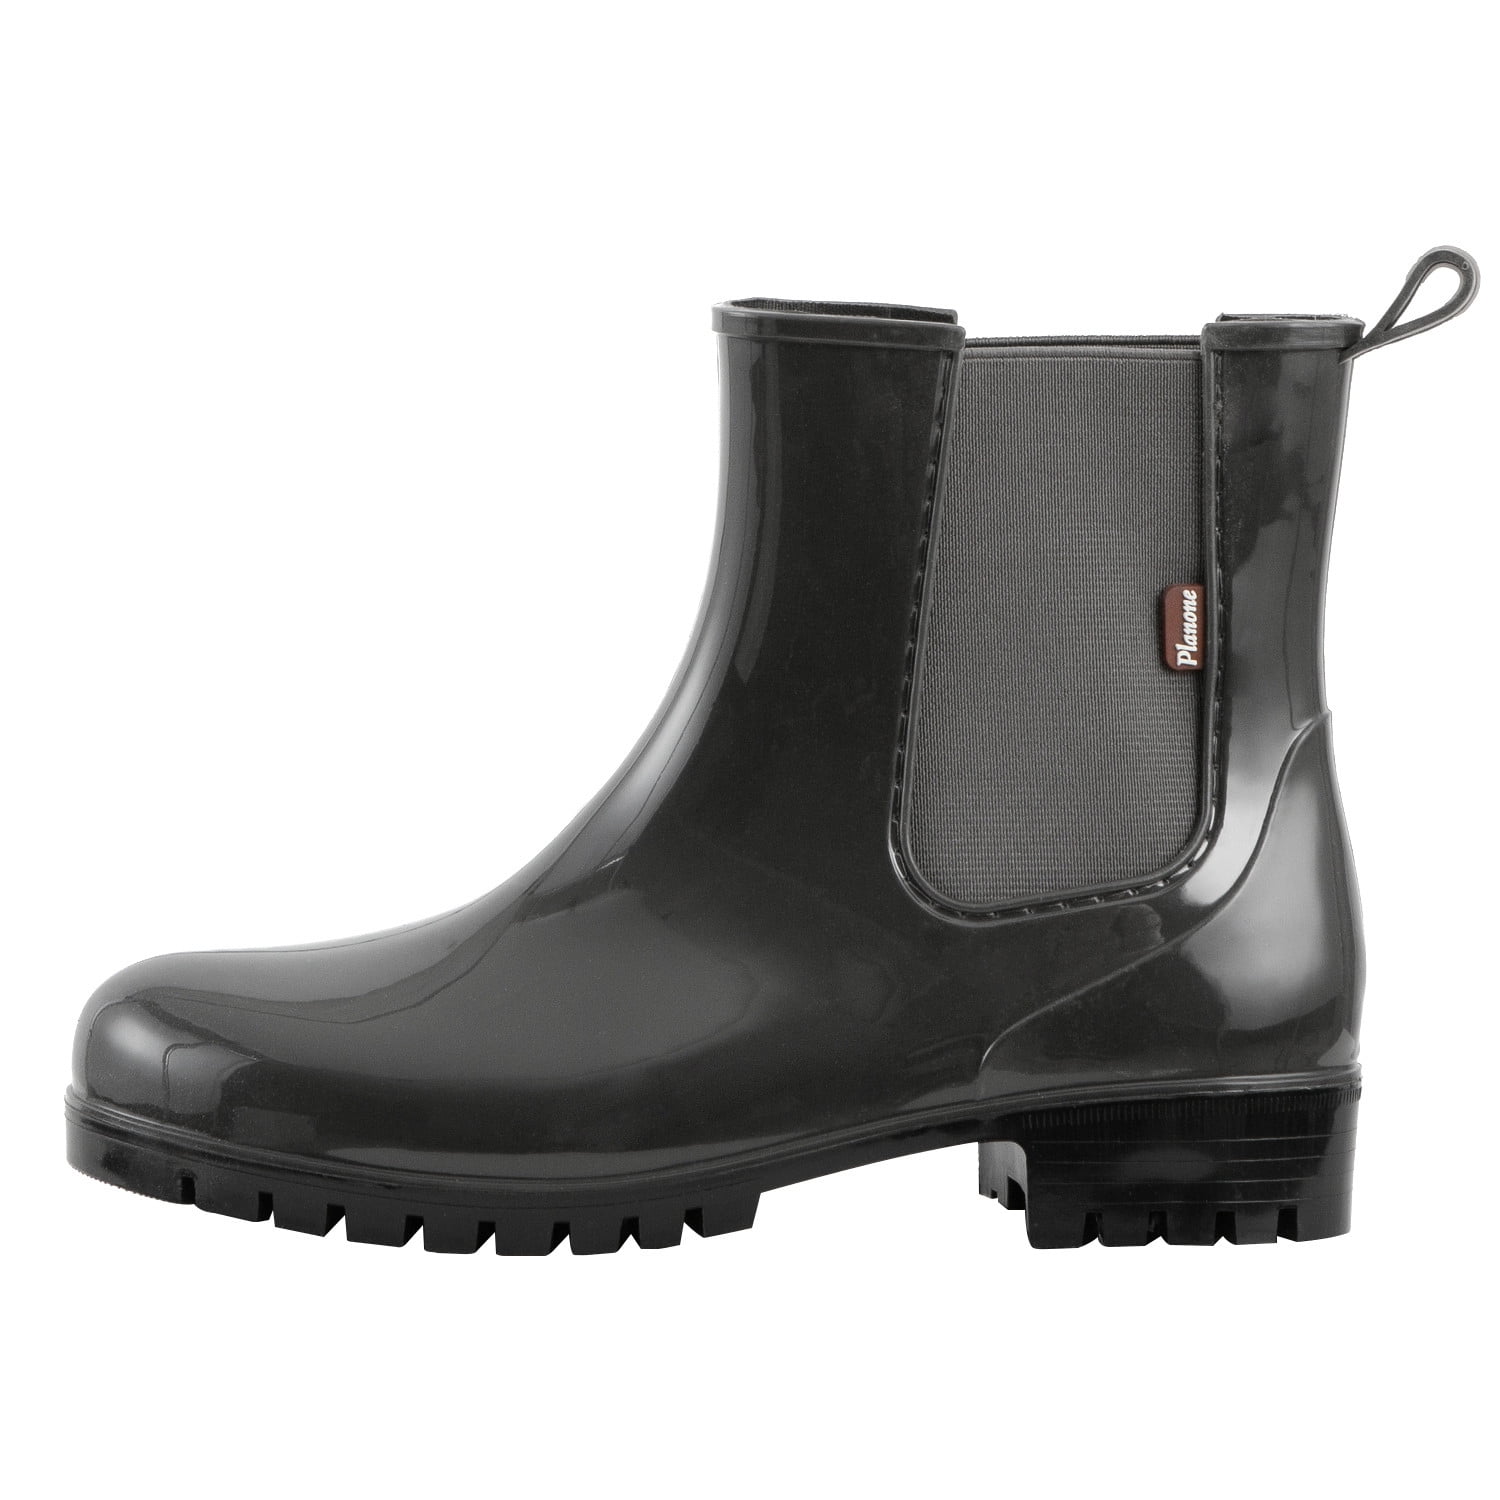 Planone Short rain Boots for Women and Waterproof Garden Shoes Anti ...